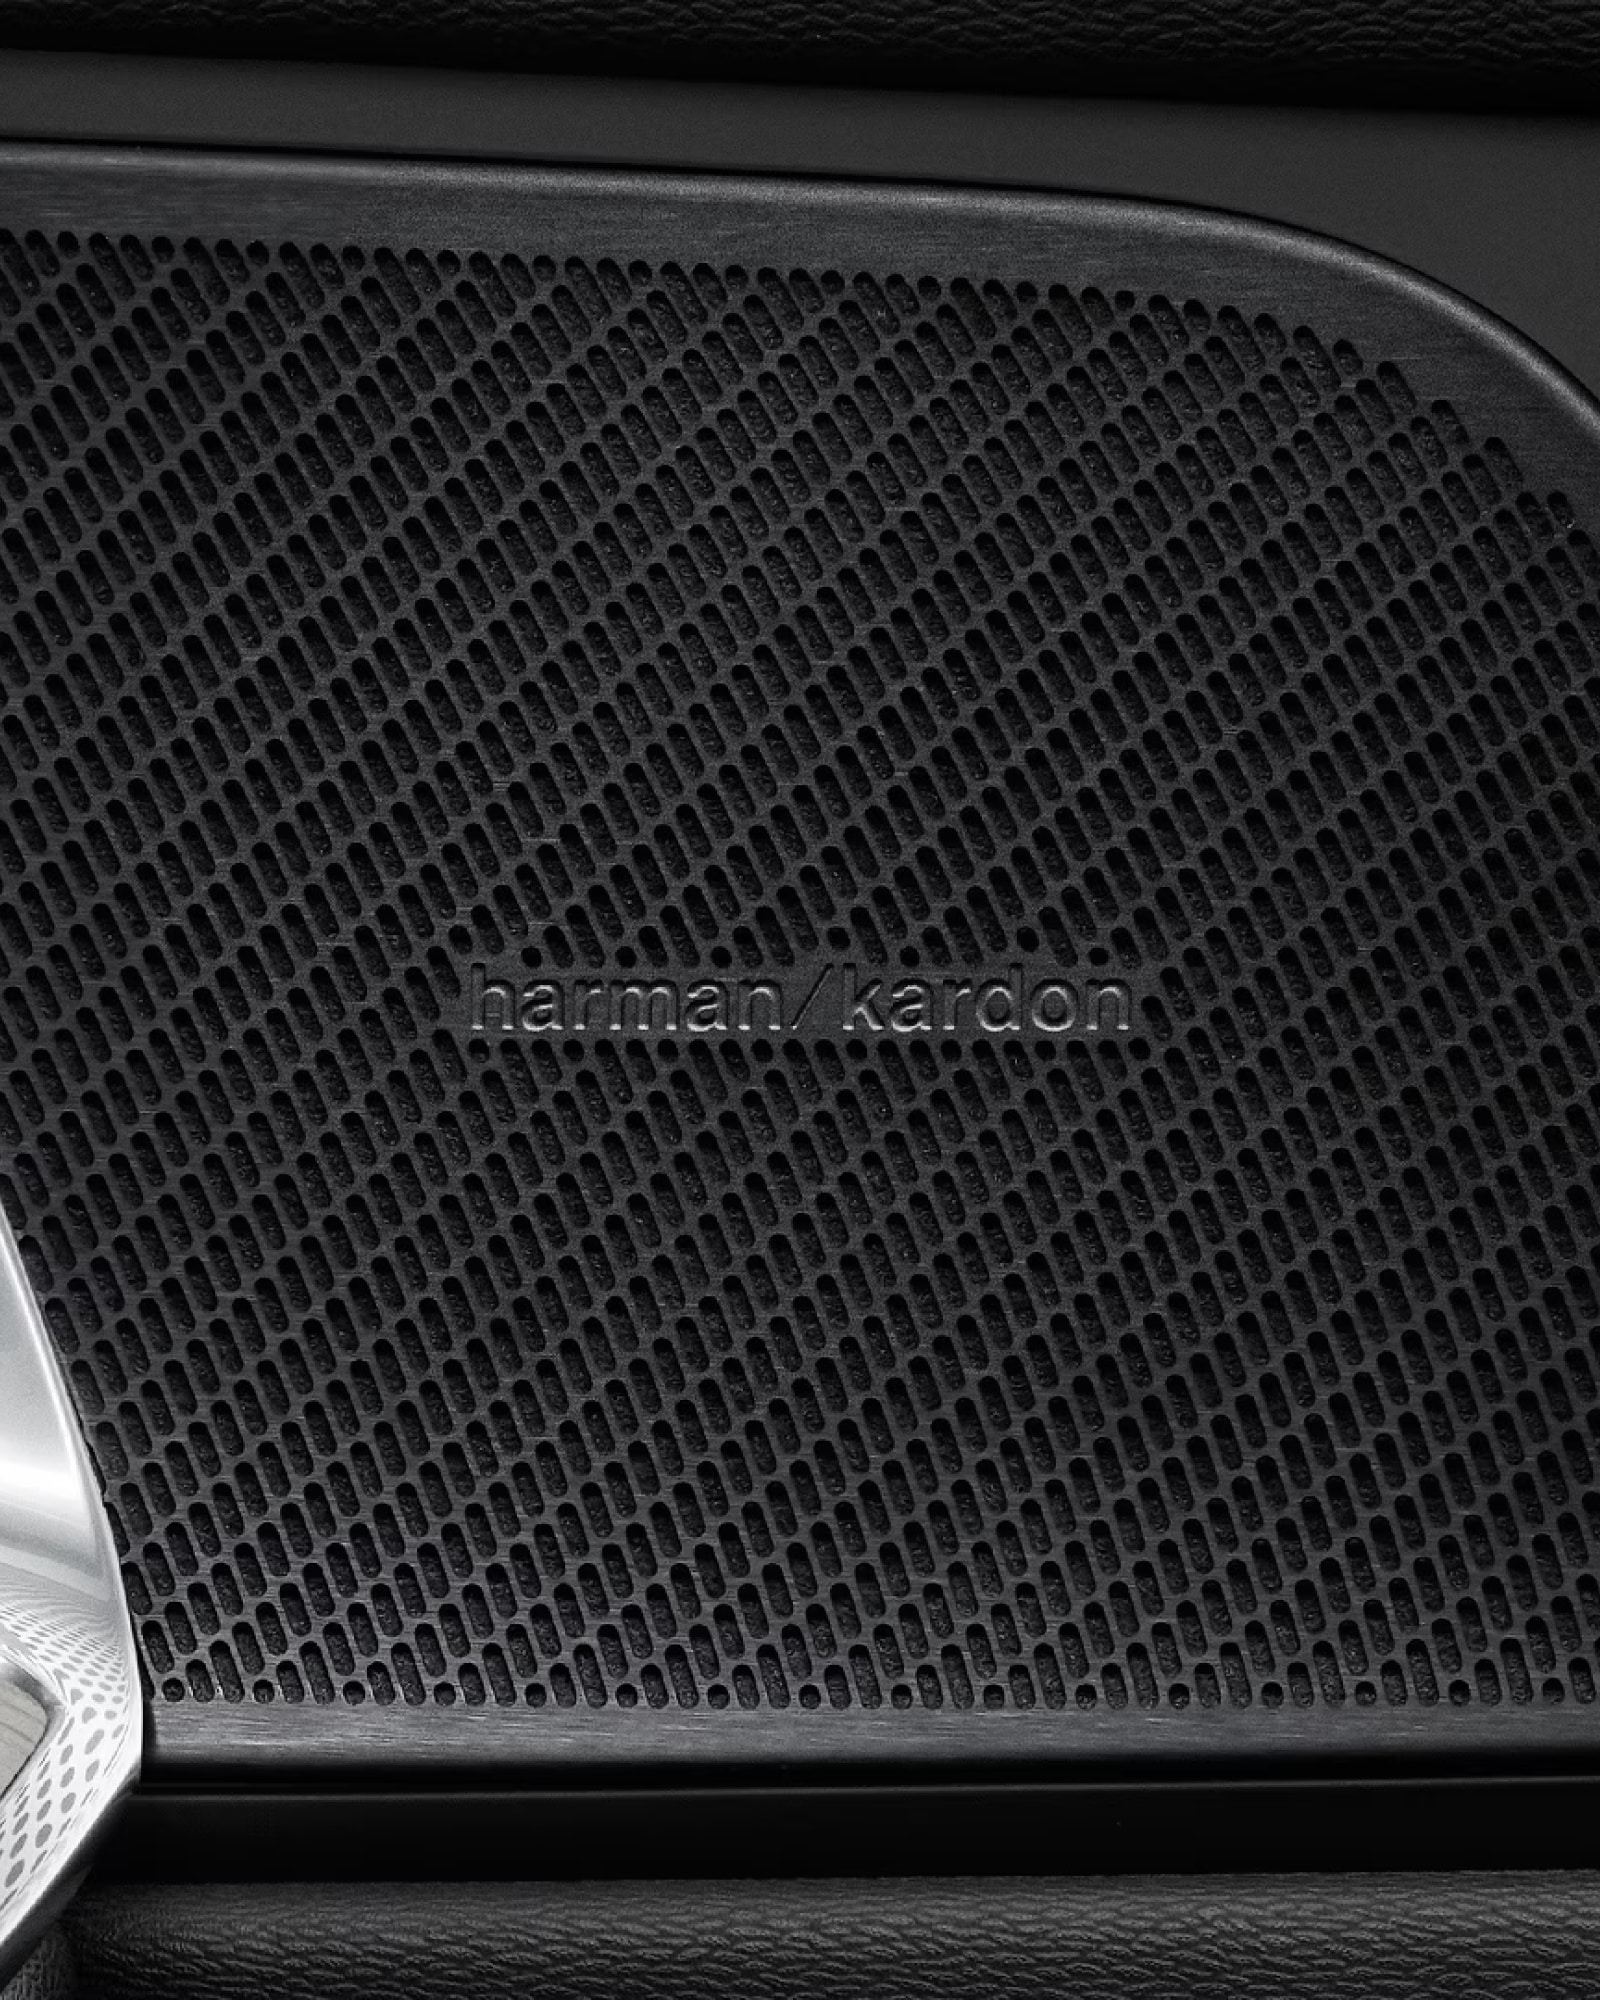 Harman Kardon speakers inside a Volvo V60.